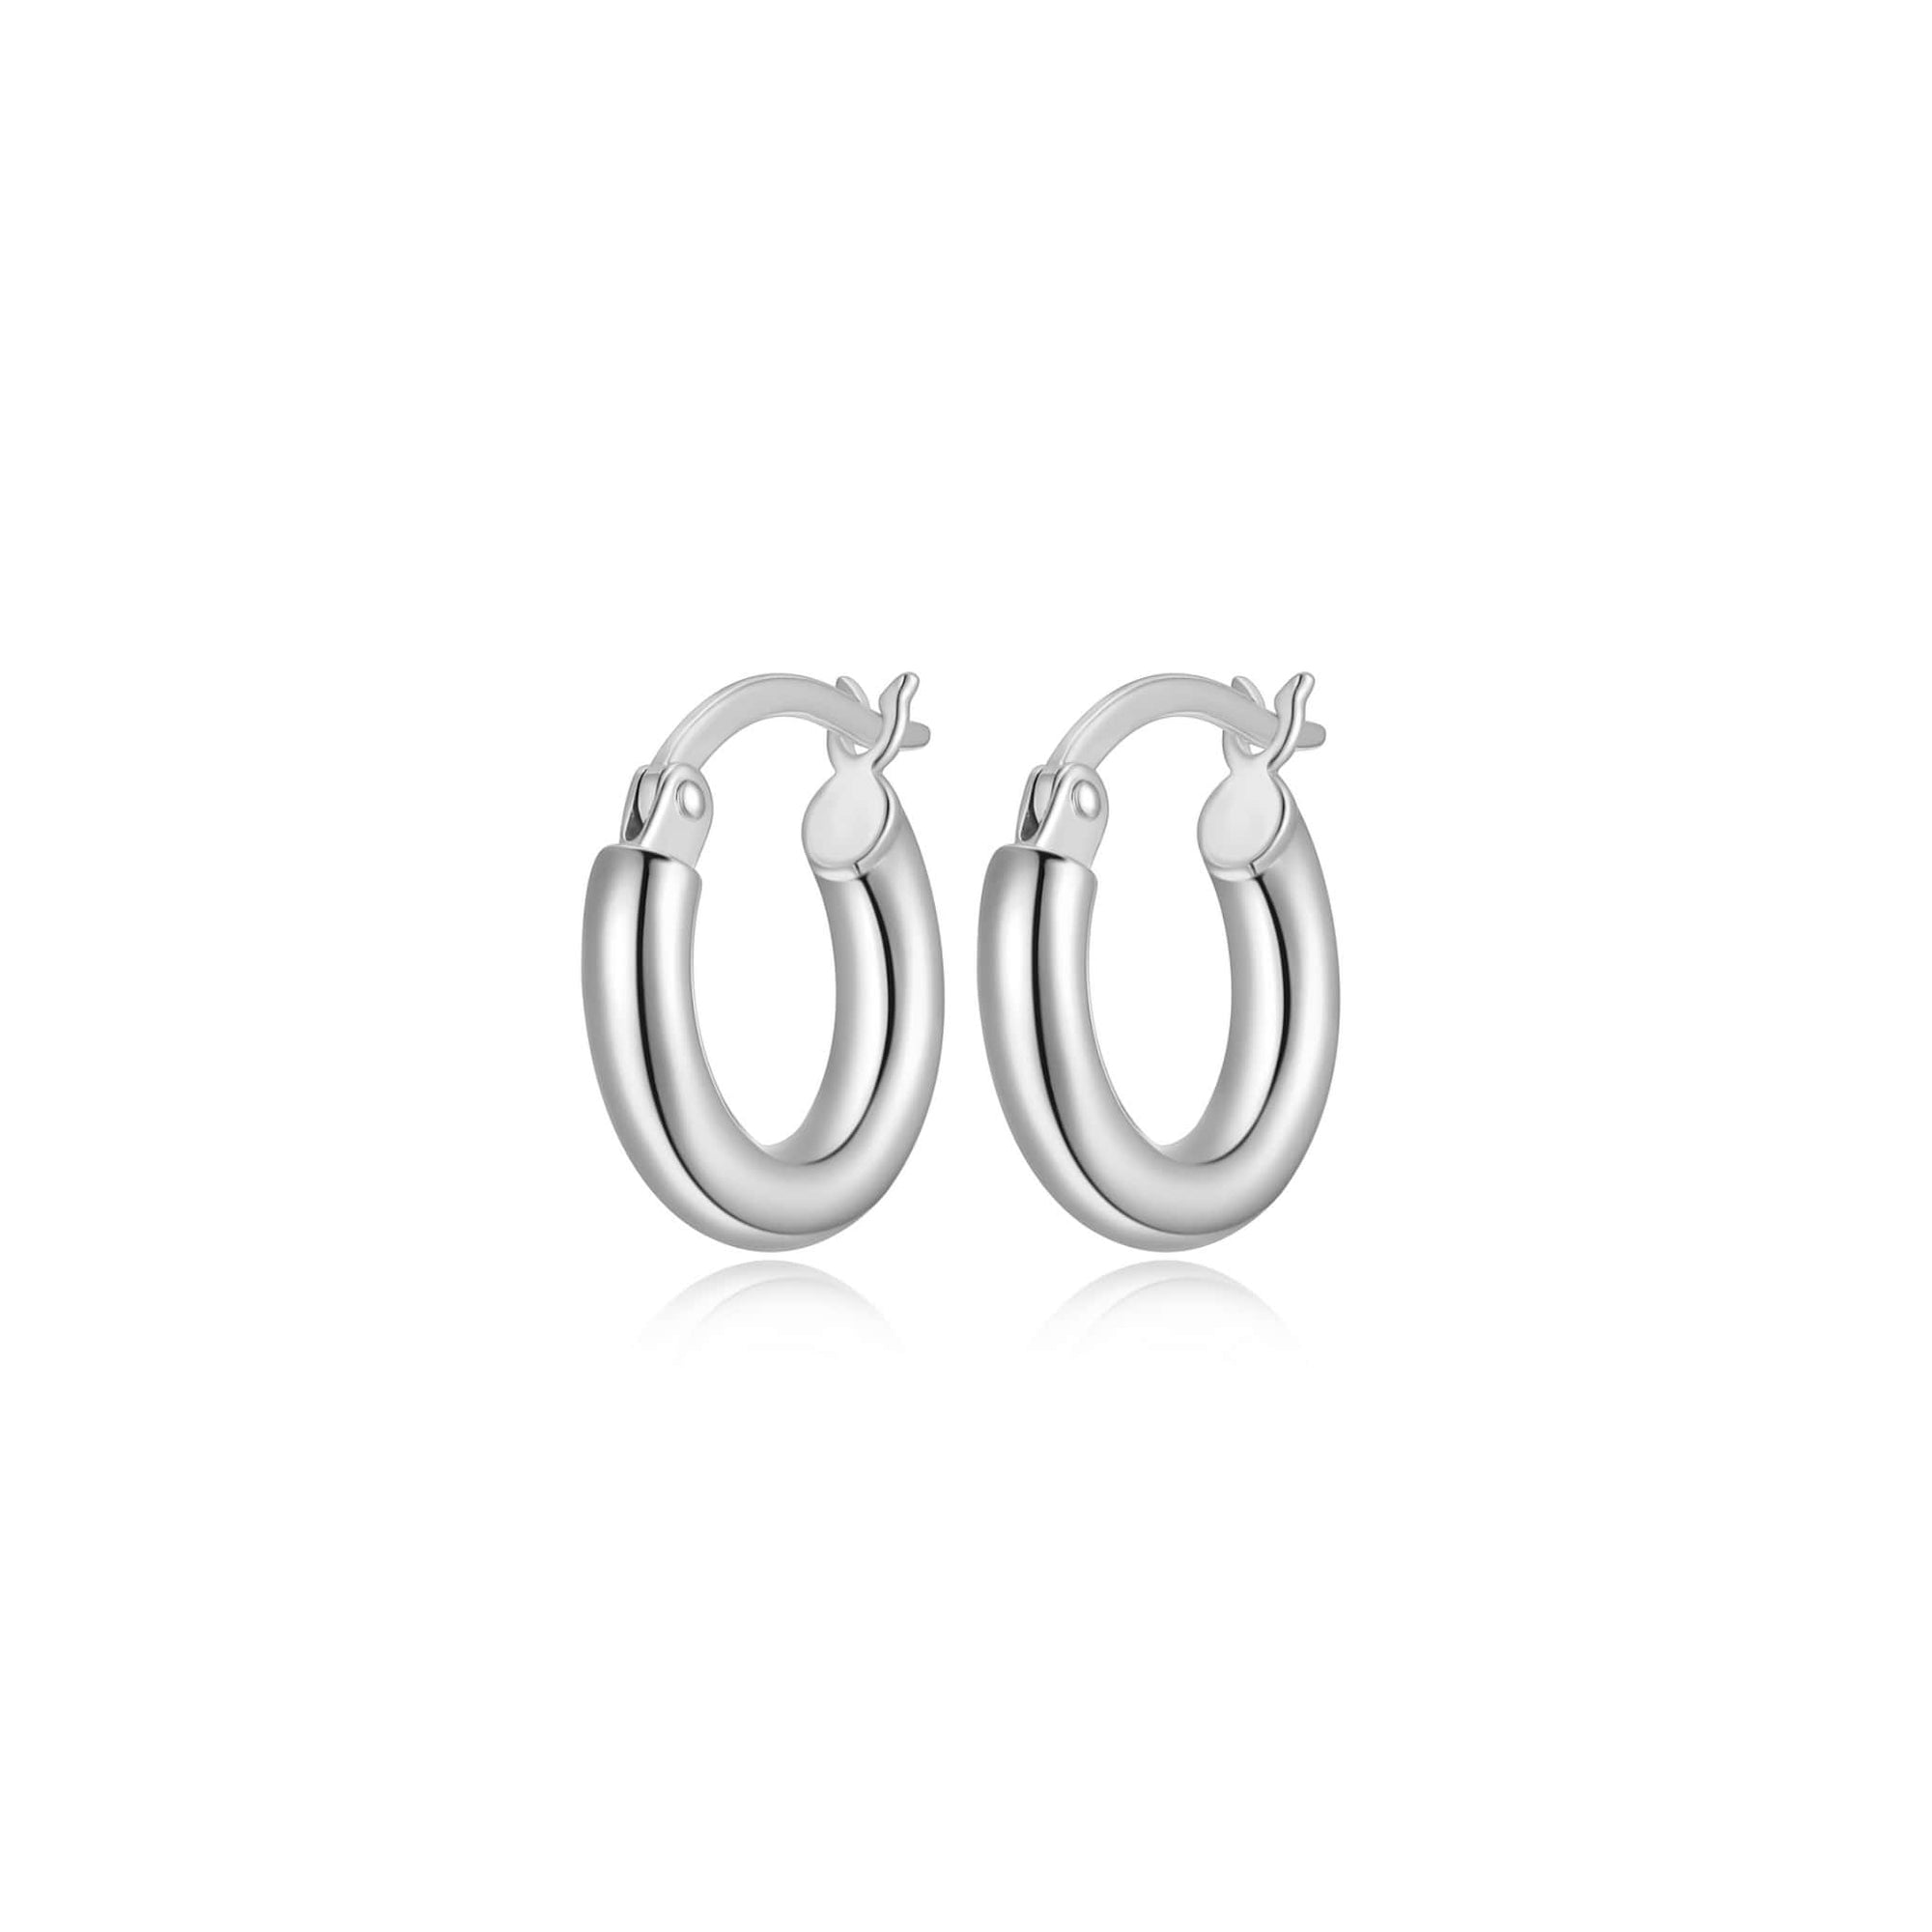 15mm Polished Tube Silver Hoop Earrings at Arman's Jewellers Kitchener